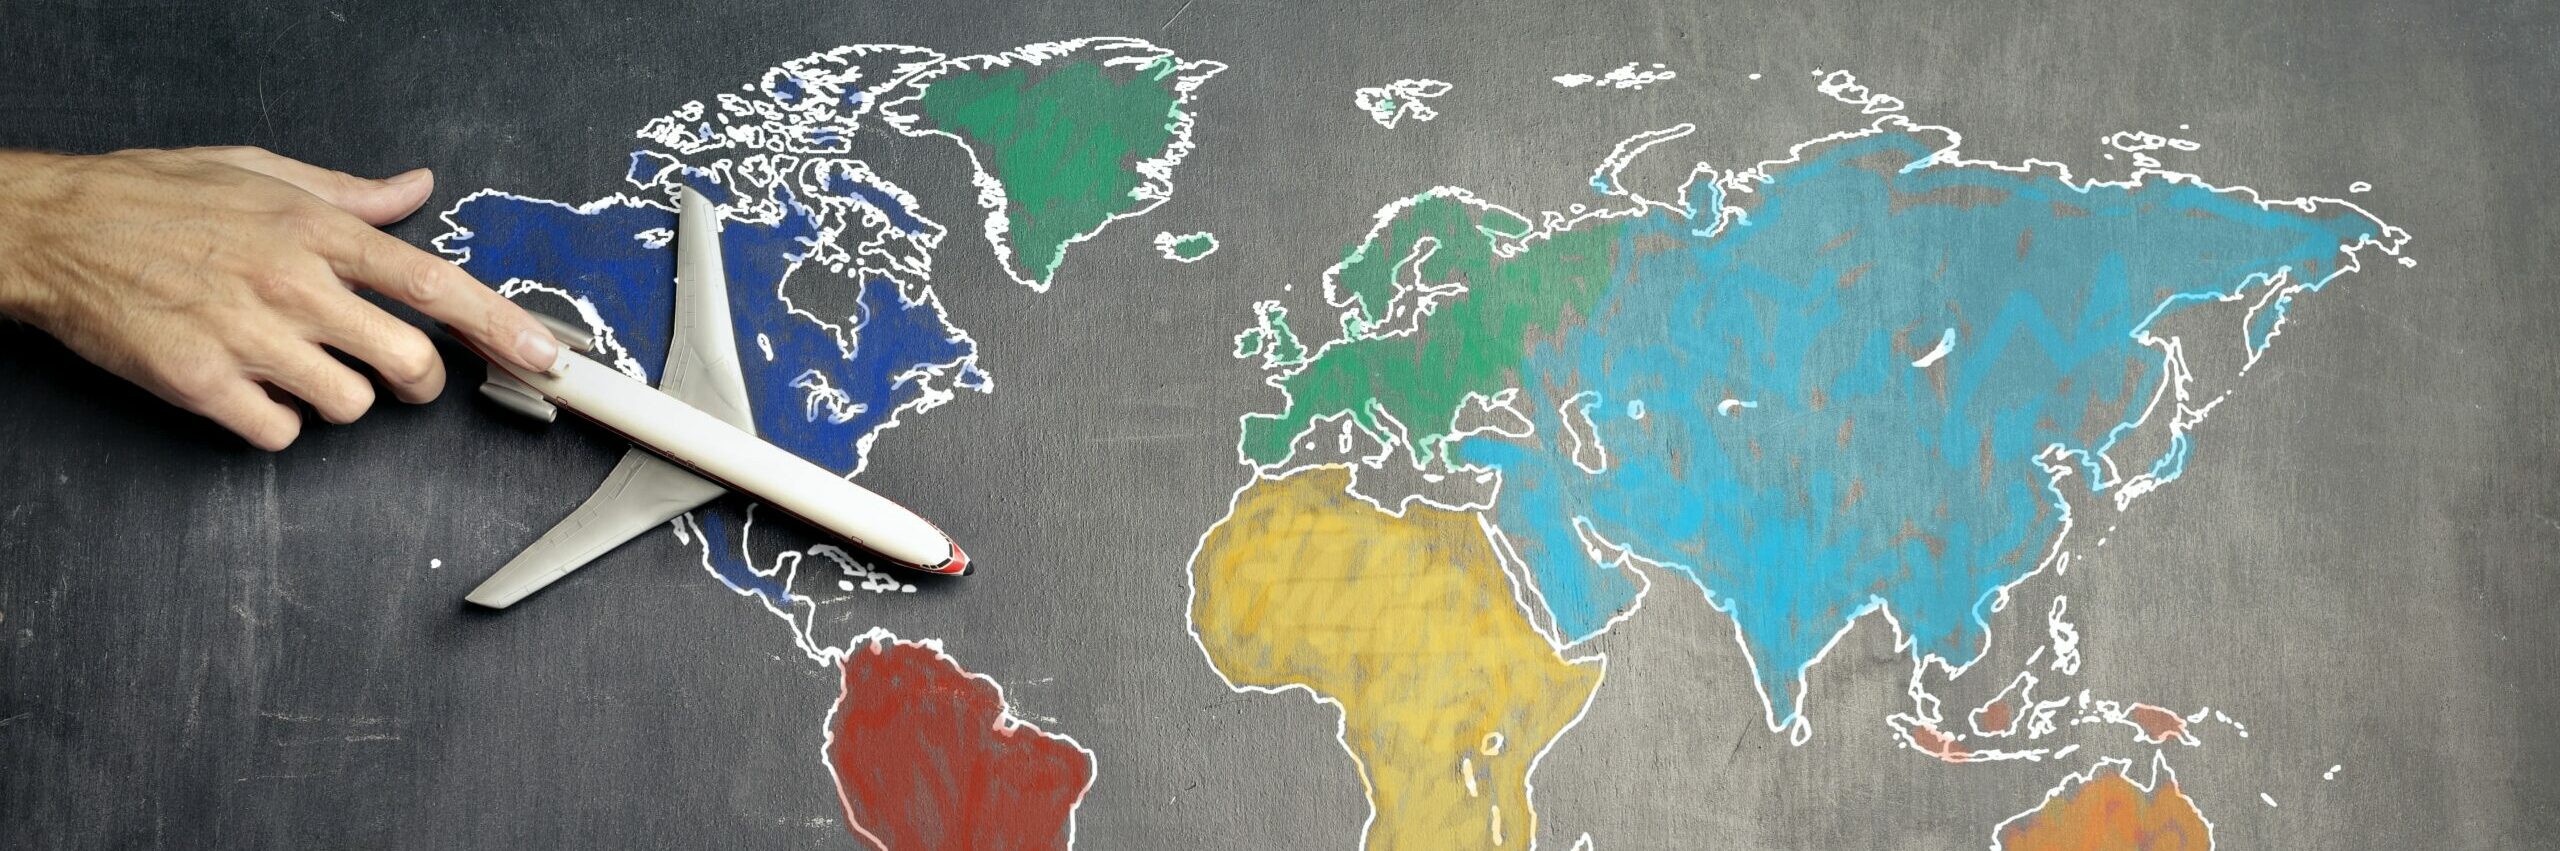 Map plane travel international world